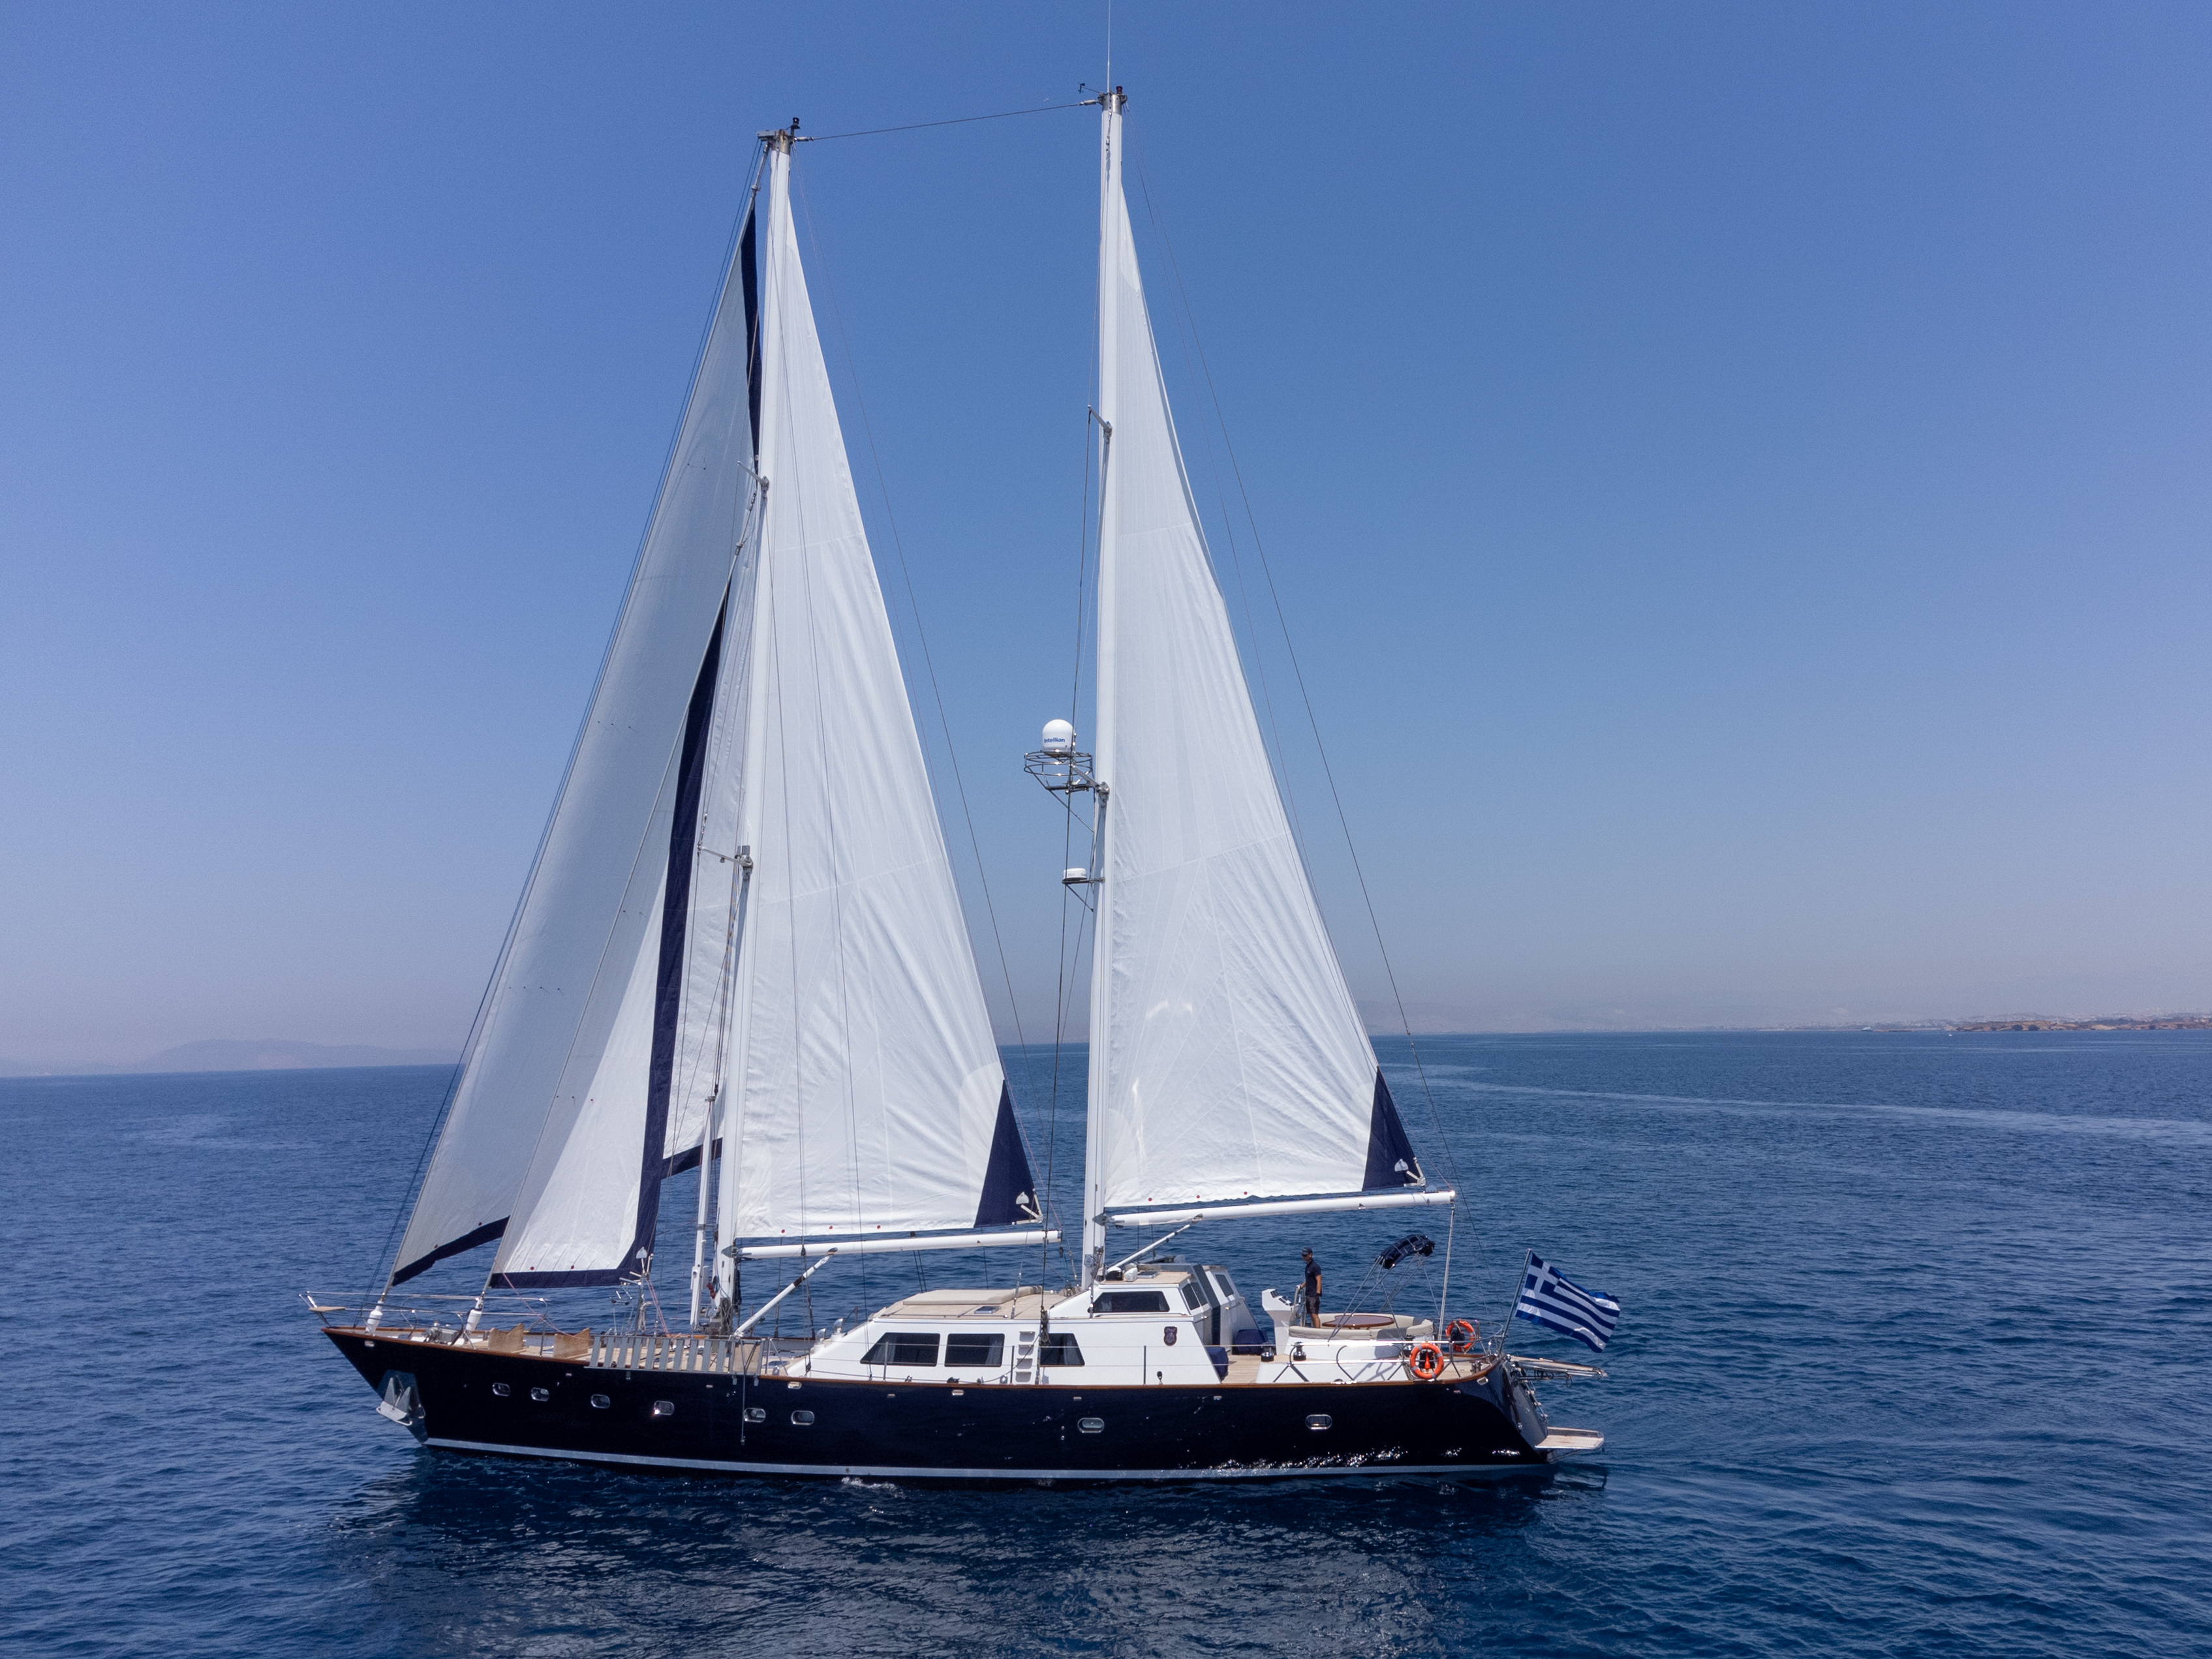 CCYD 85 - Location de Superyacht dans le Monde Entier & Boat hire in Greece Athens and Saronic Gulf Athens Piraeus Marina Zea 5